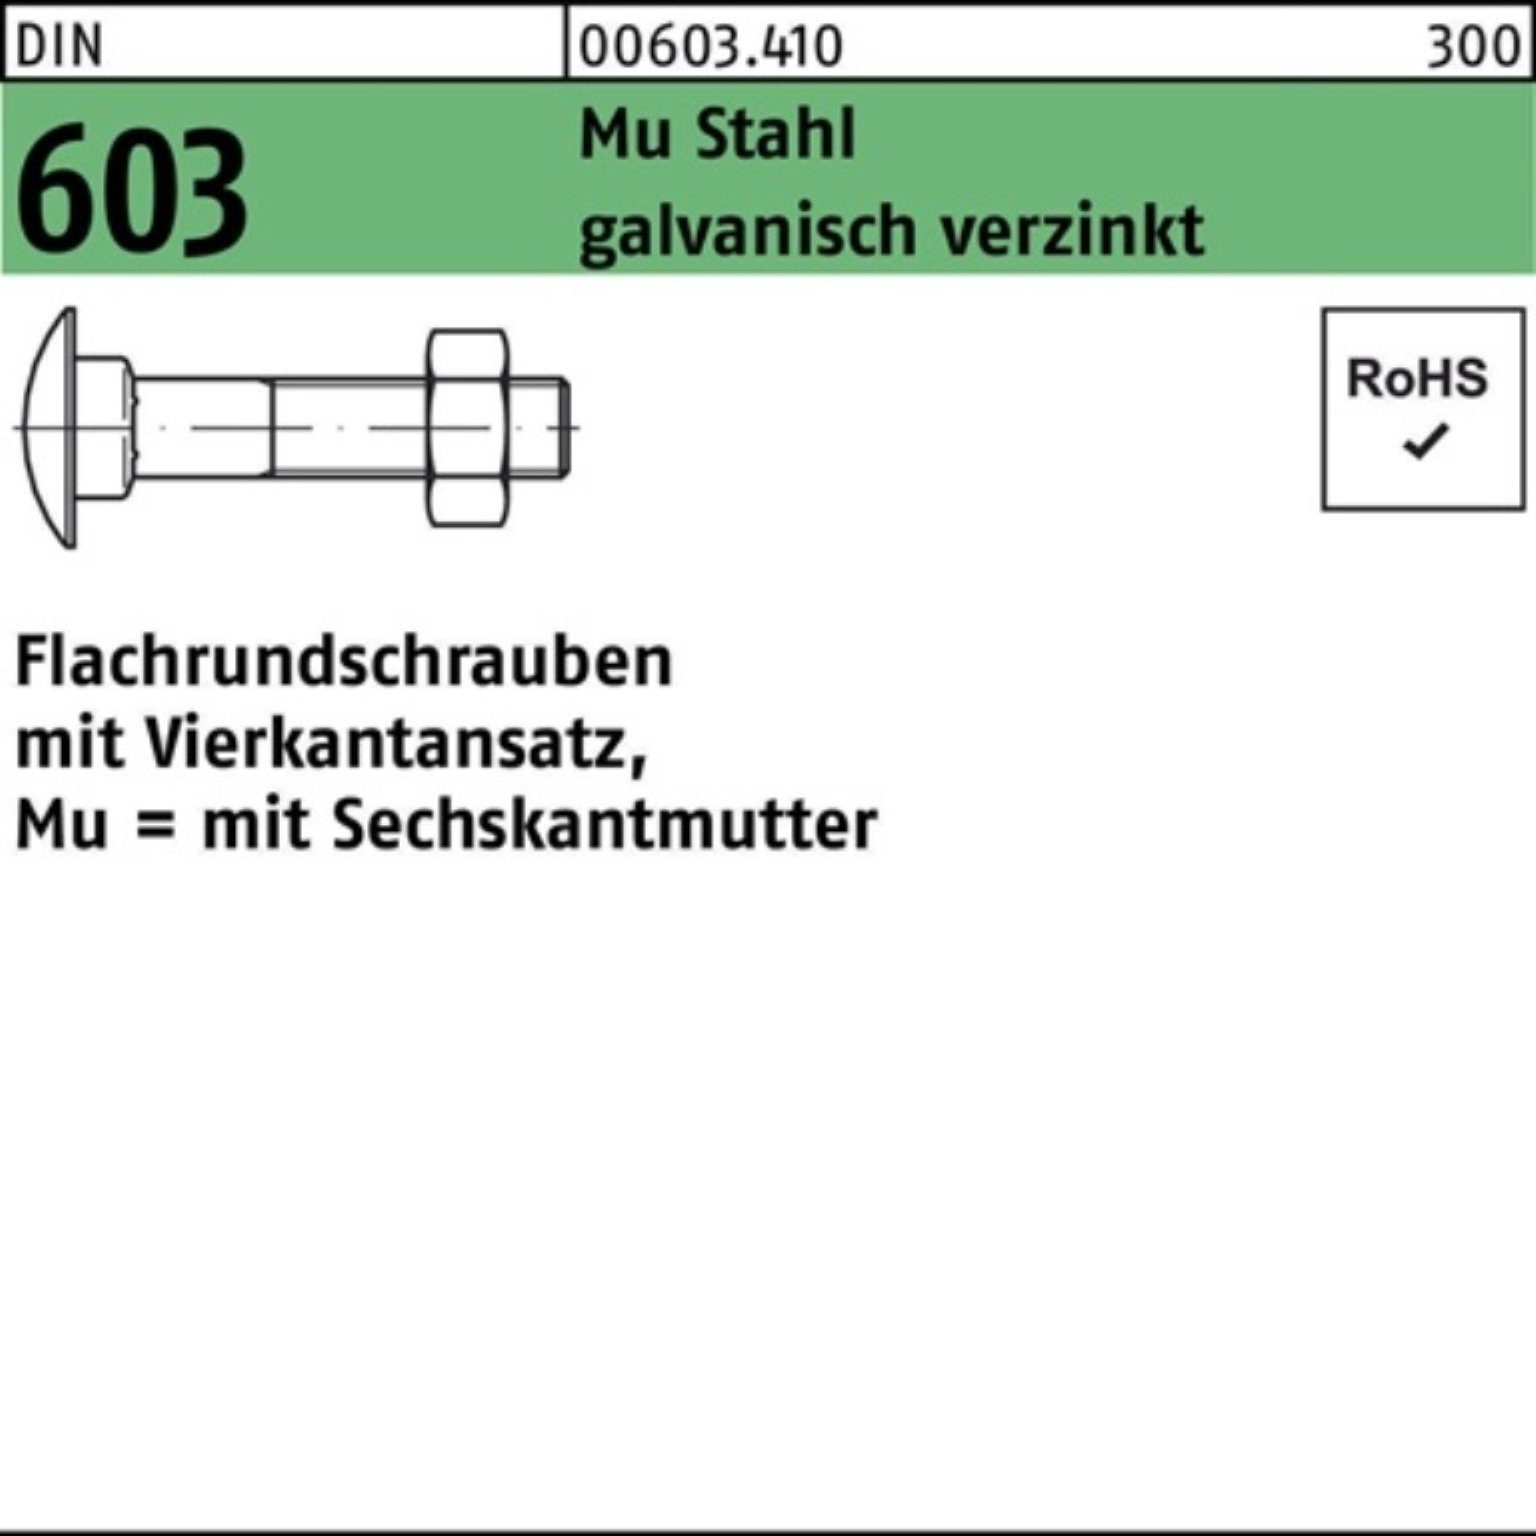 Flachrundschraube M8x180 Vierkantansatz/6-ktmutter Reyher 603 Pack DIN 100er Schraube